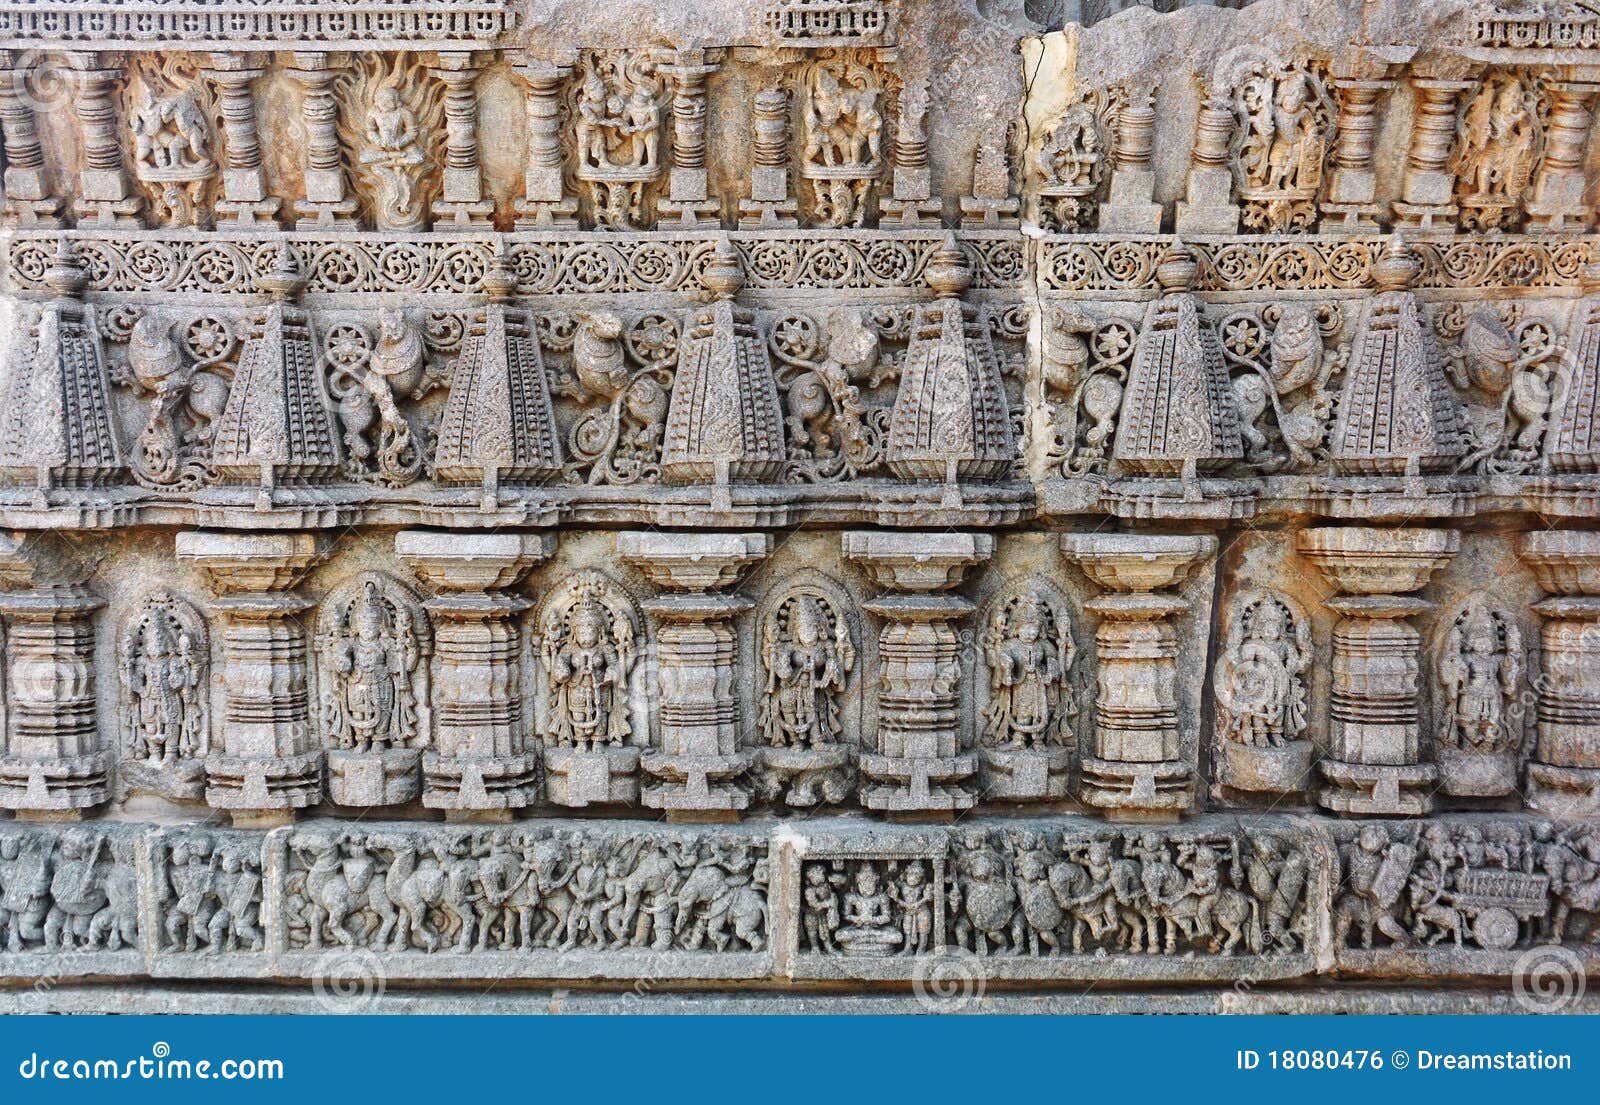 carving at keshava temple,mysore